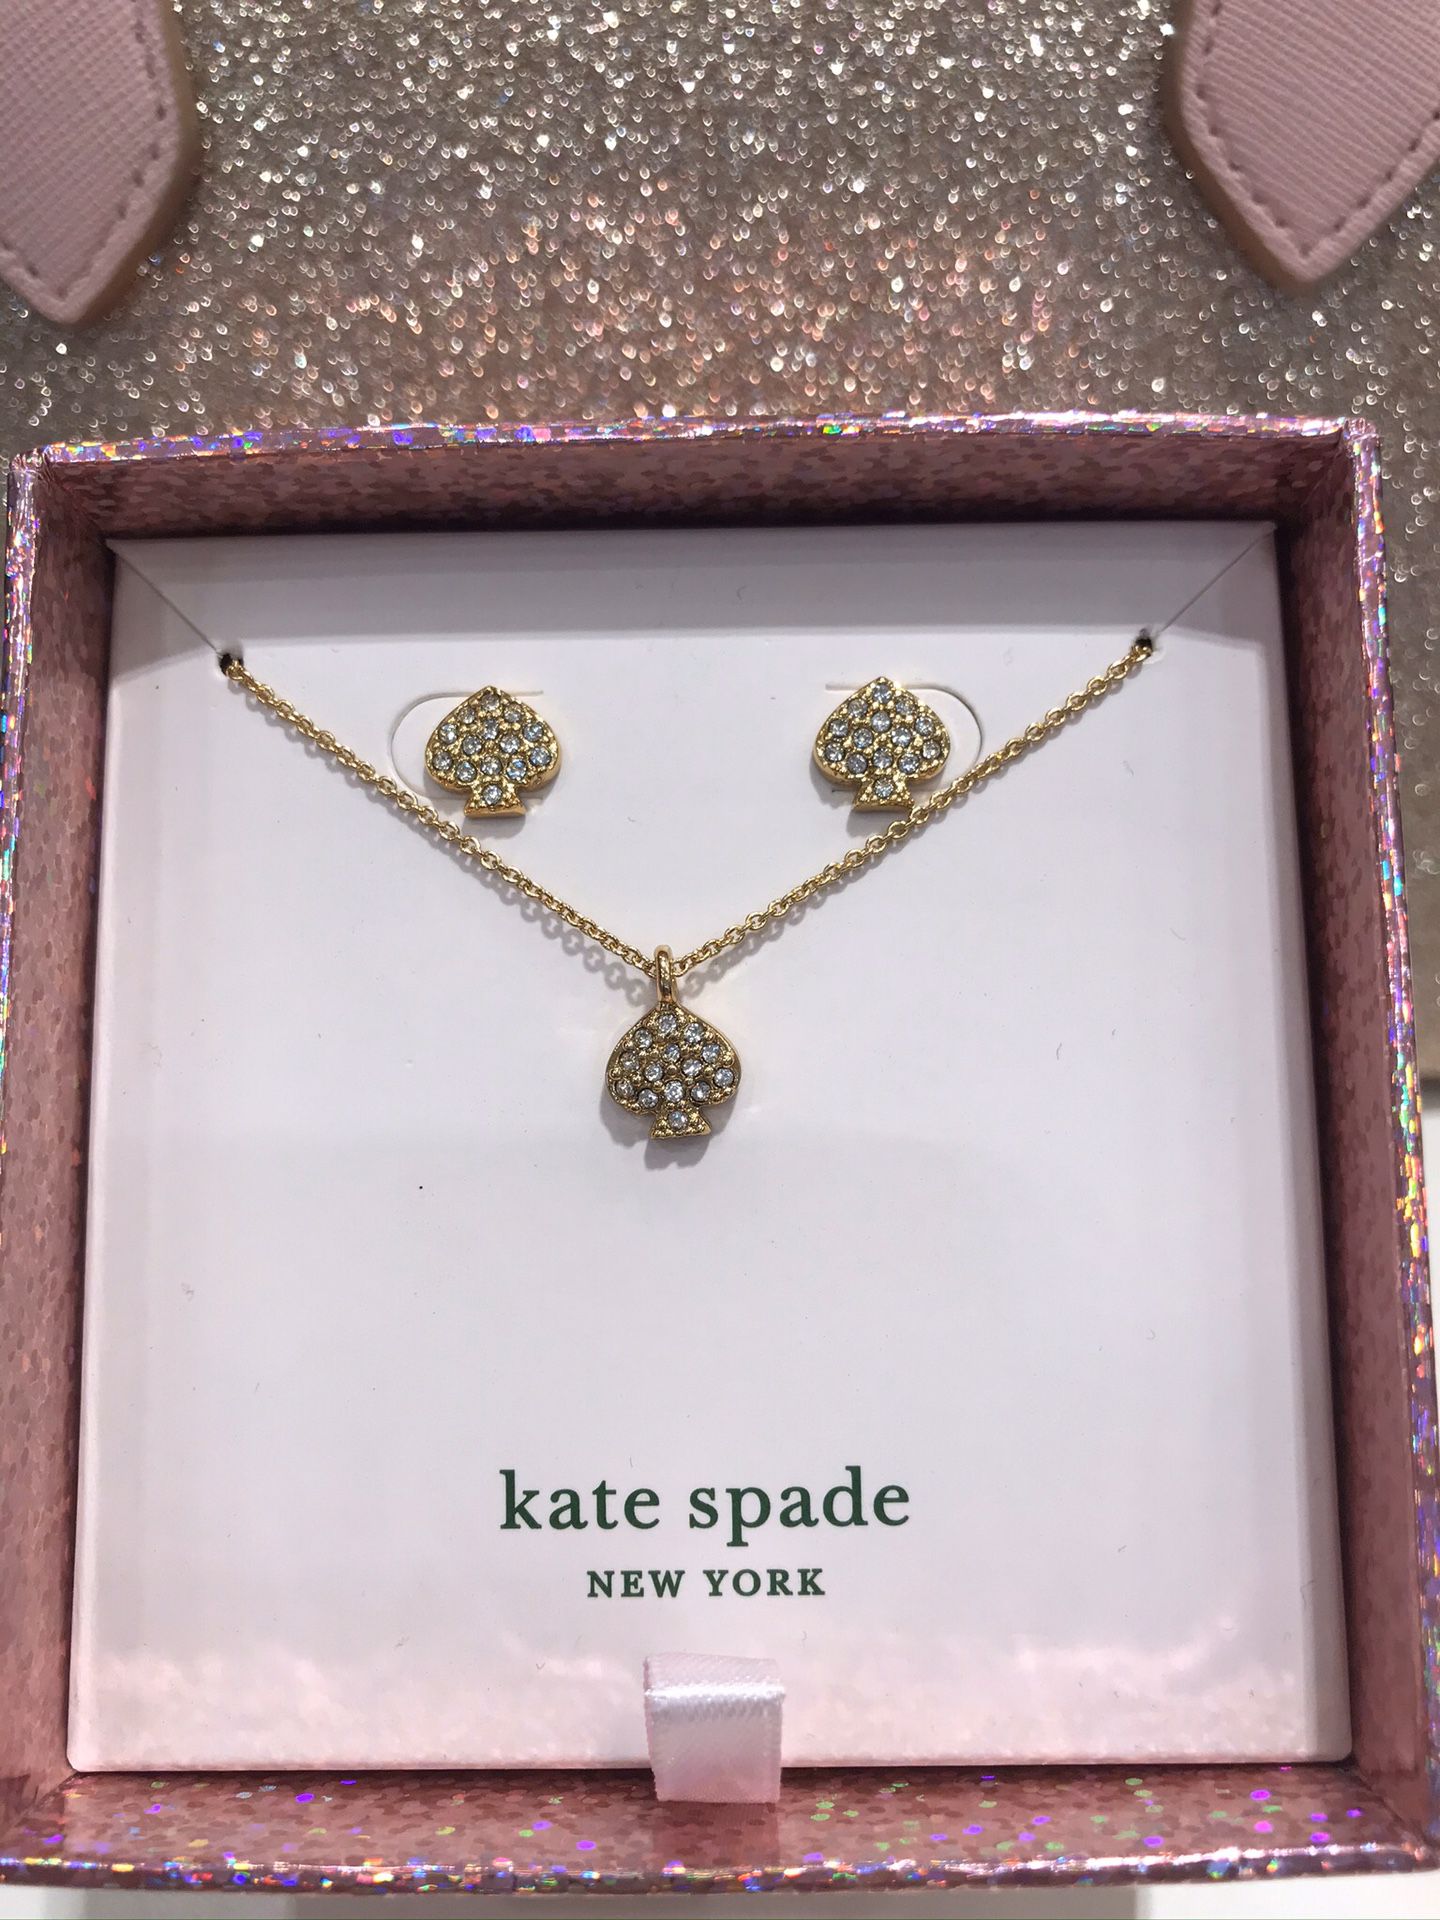 NEW Kate spade jewelry set